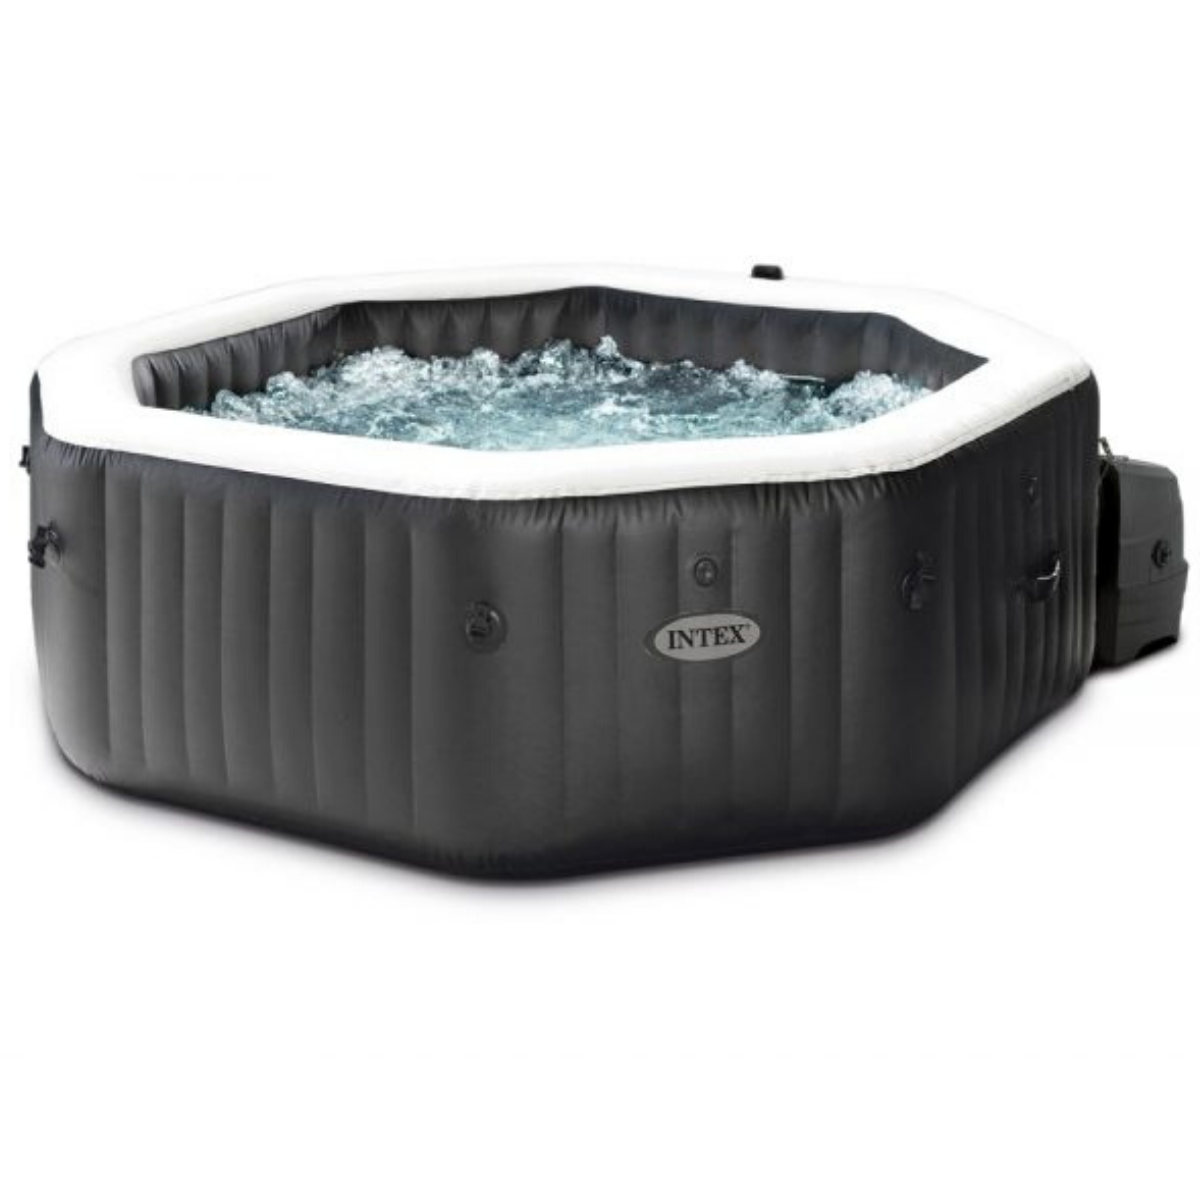 Intex Octagonal Pure Spa – 4 Person Bubble Therapy Hot Tub – Hot Tub